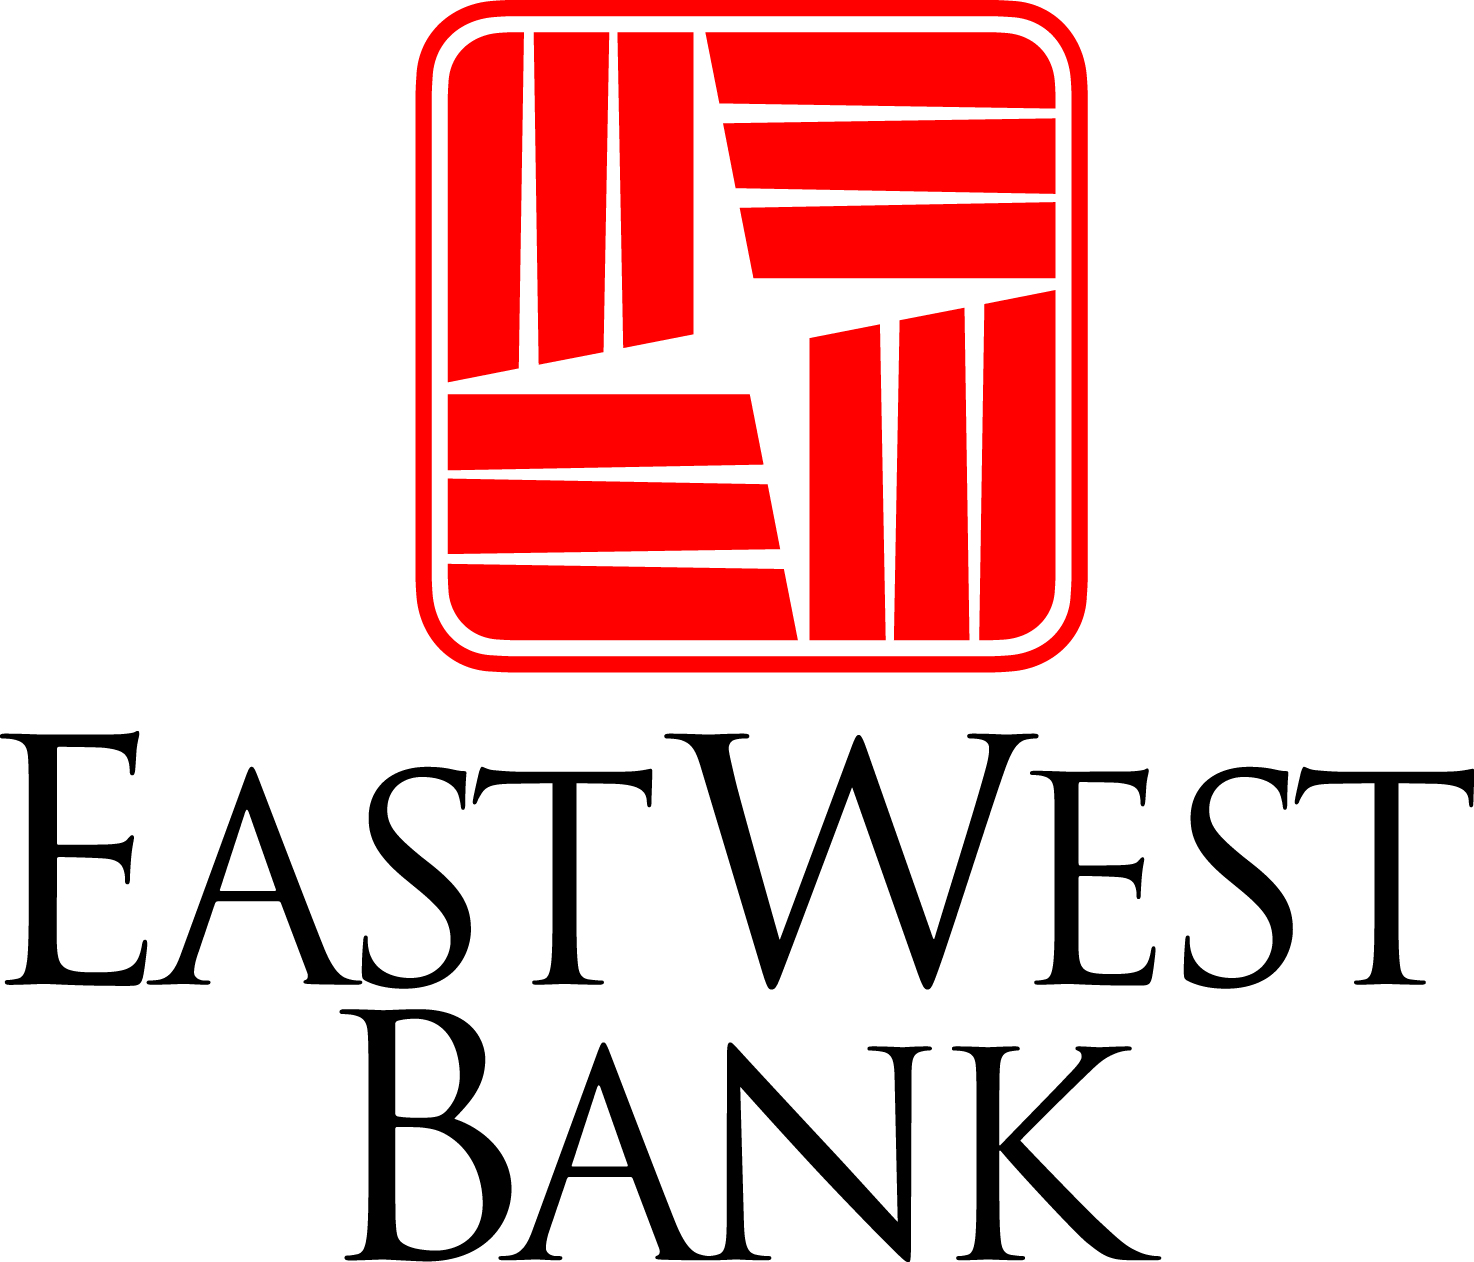 East West bank logo